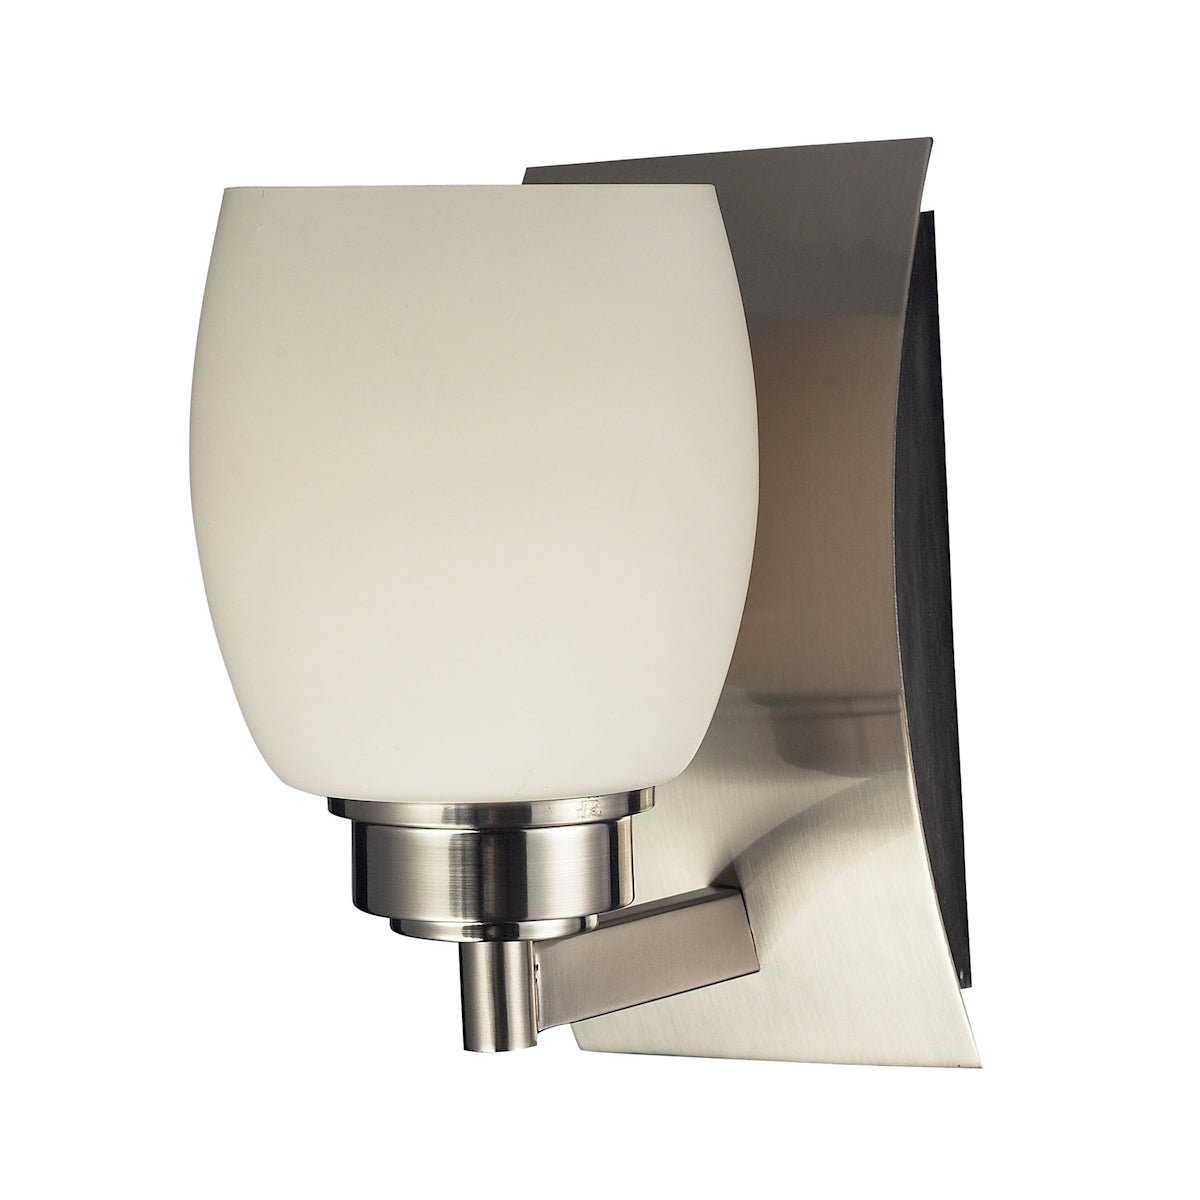 ELK Lighting 17100/1 Northport 1-Light Vanity Lamp in Satin Nickel with Opal Glass